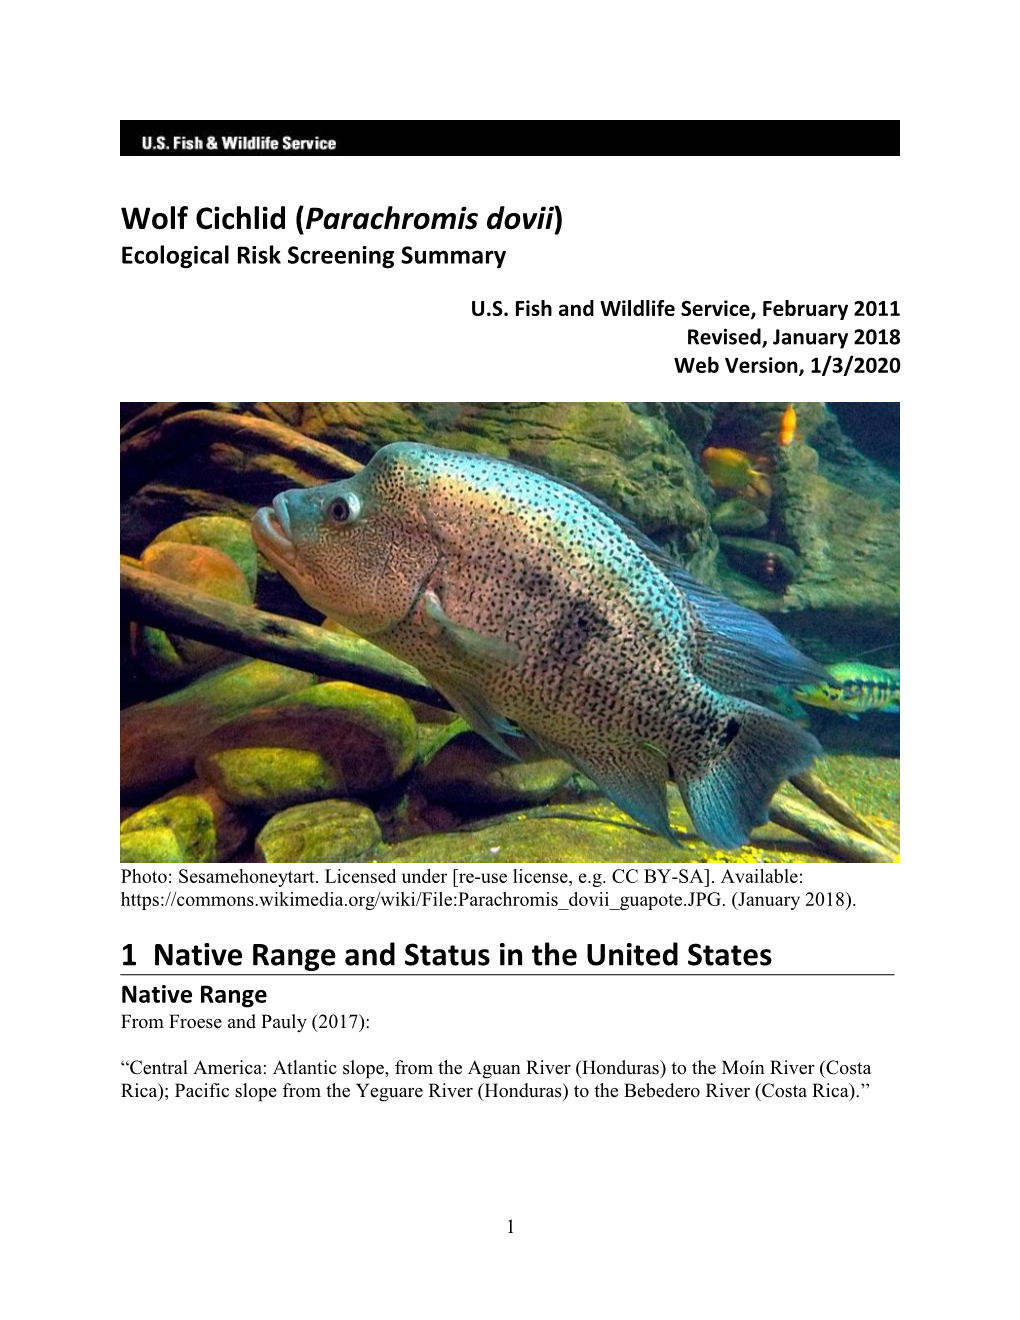 Parachromis Dovii Ecological Risk Screening Summary